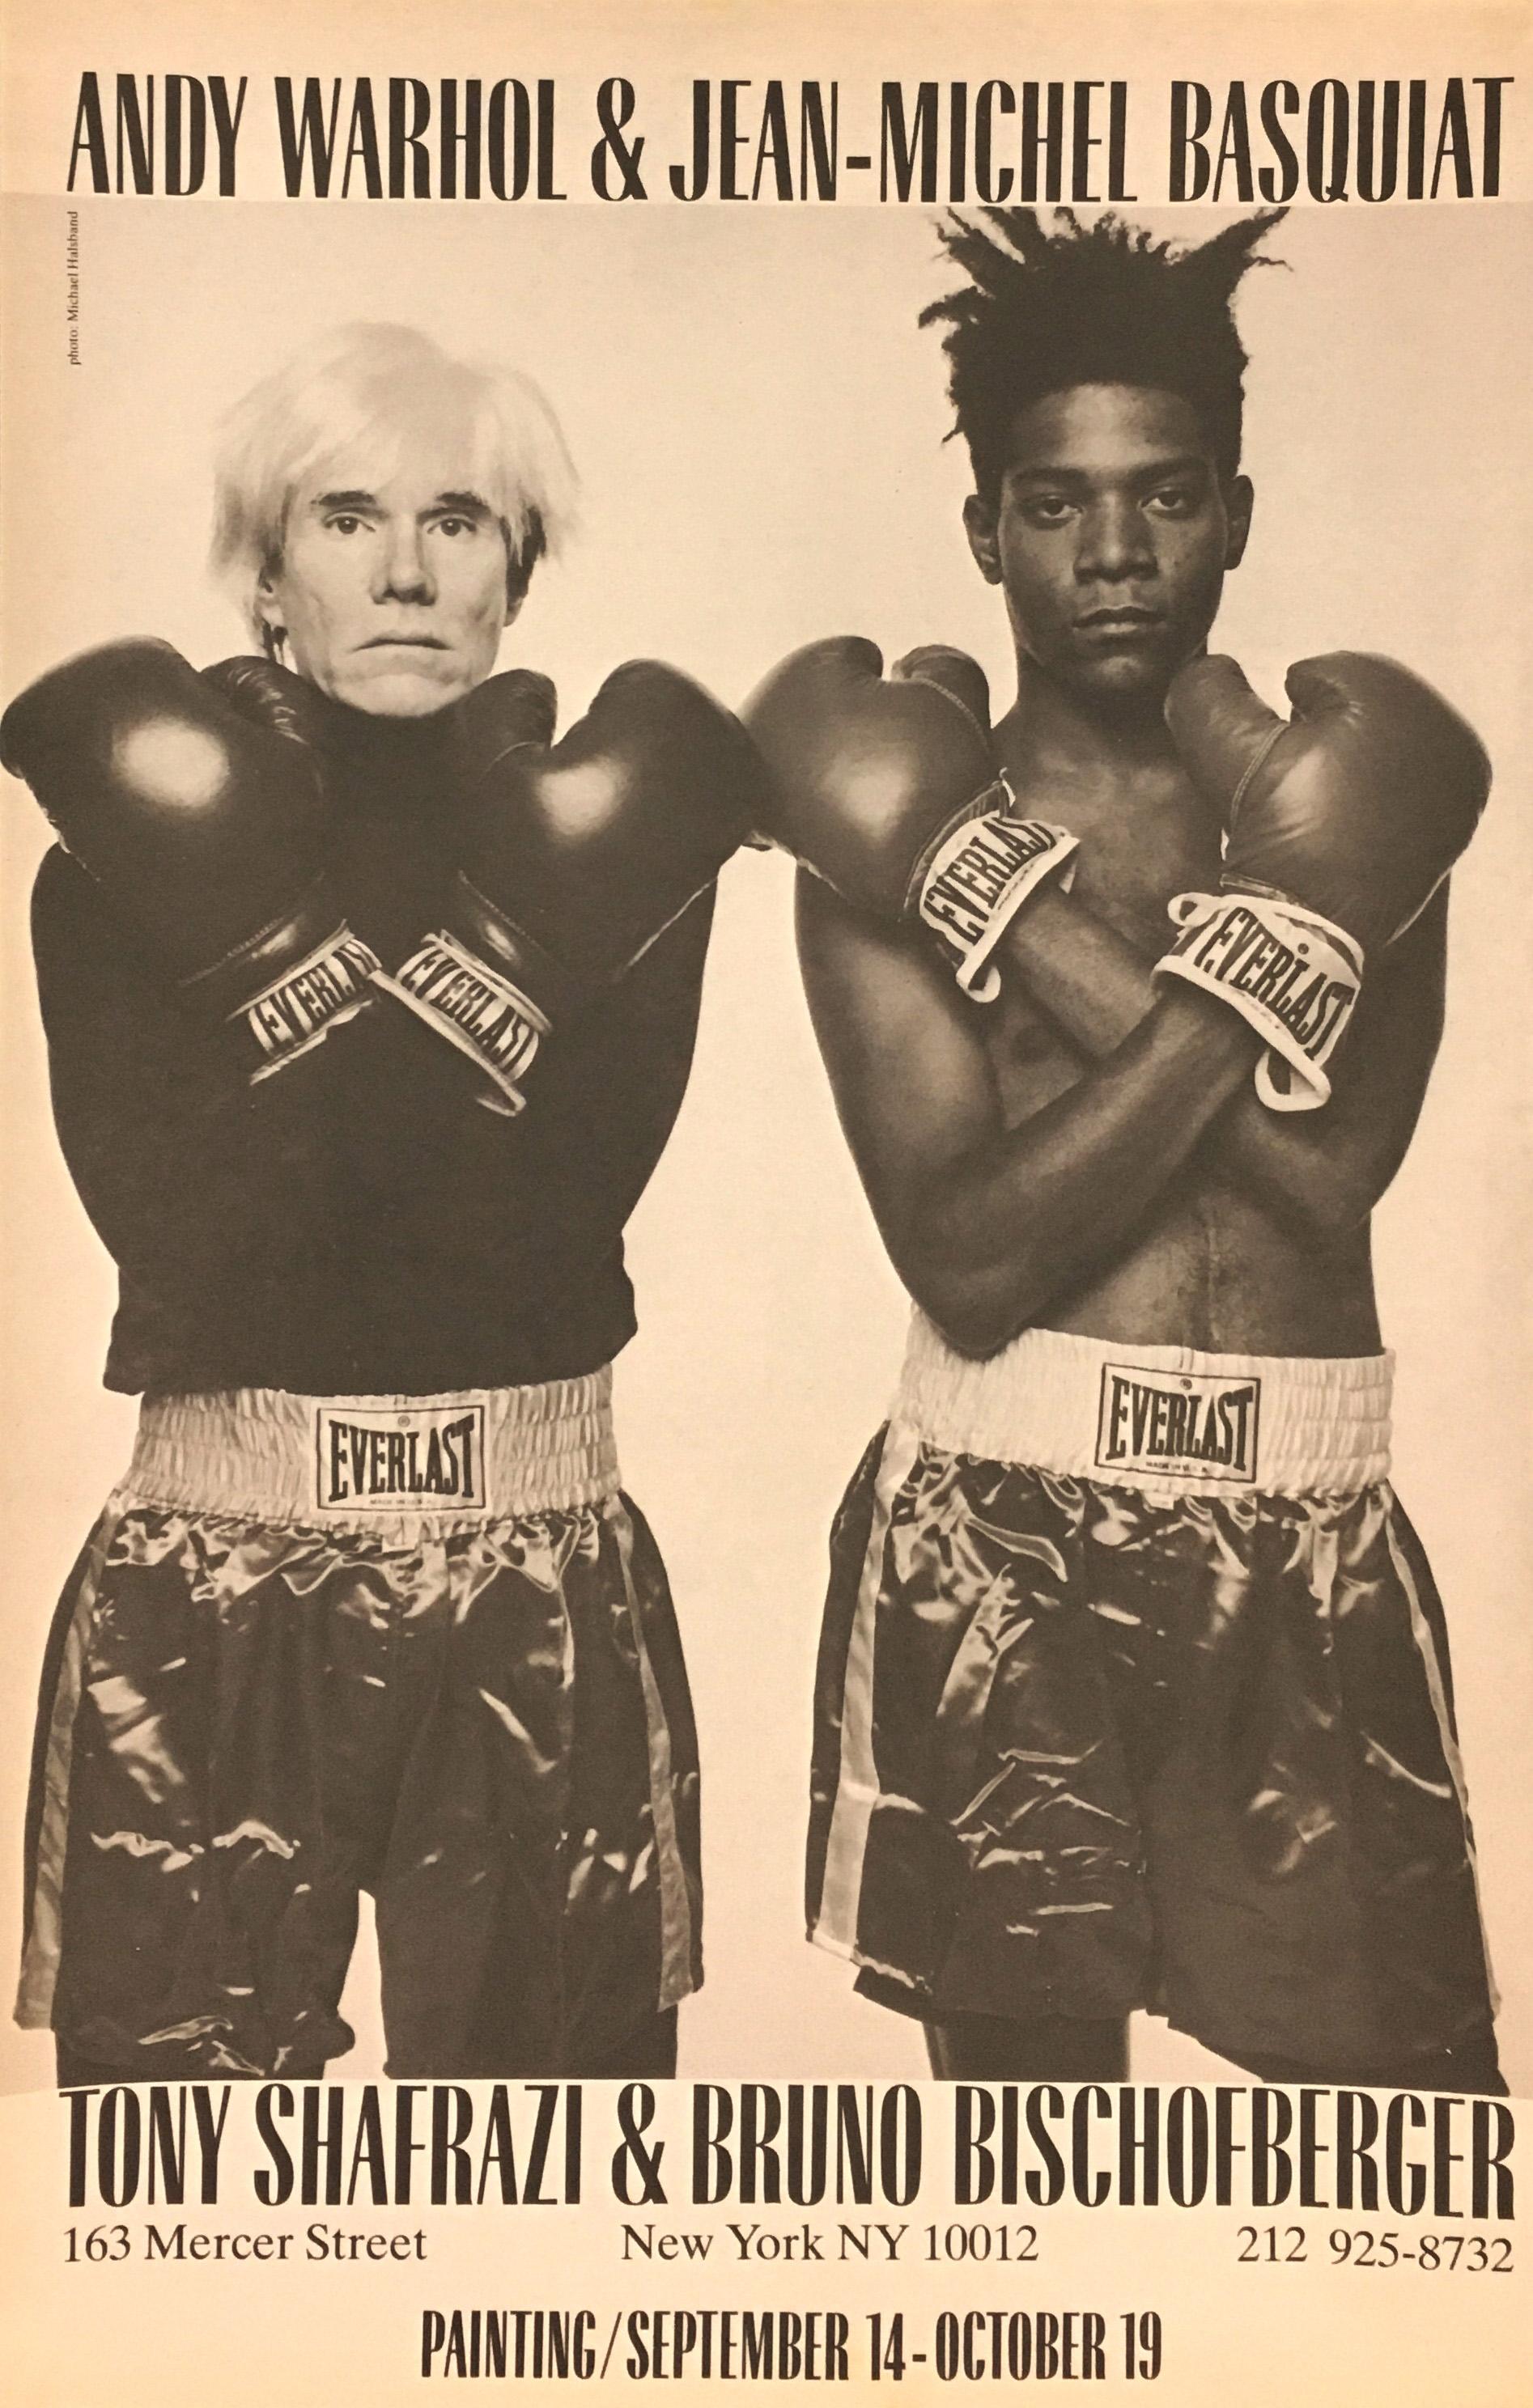 Warhol Basquiat Boxing advertisement 1985 (Warhol Basquiat boxing 1985)  - Photograph by Michael Halsband